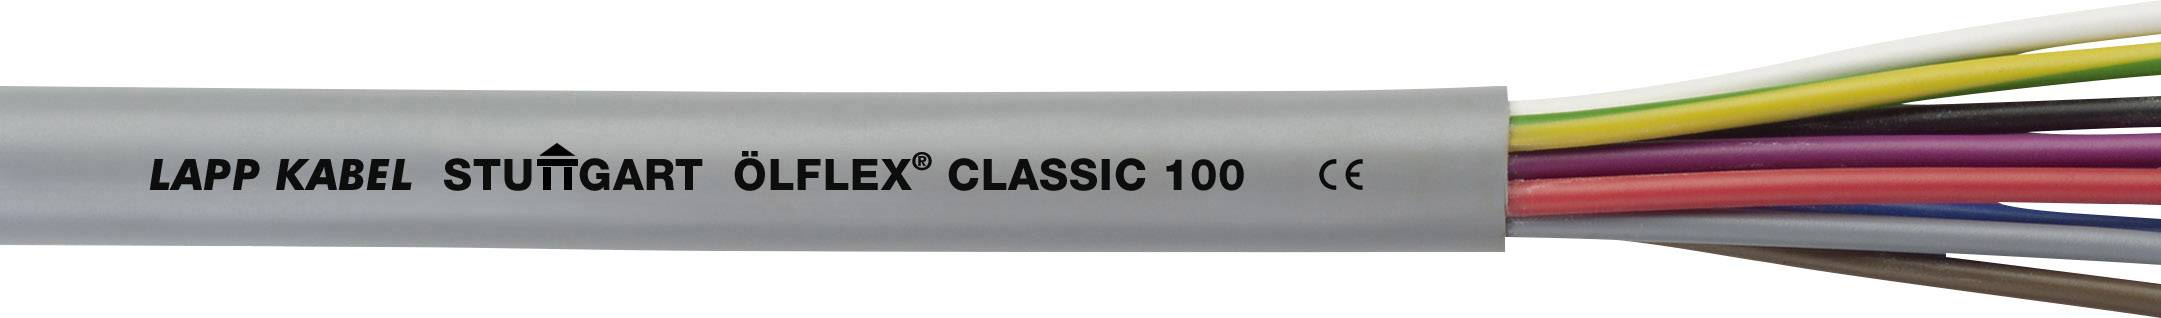 LAPP KABEL Steuerleitung ÖLFLEX® CLASSIC 100 4 G 2.50 mm² Grau LappKabel 1120802/500 500 m